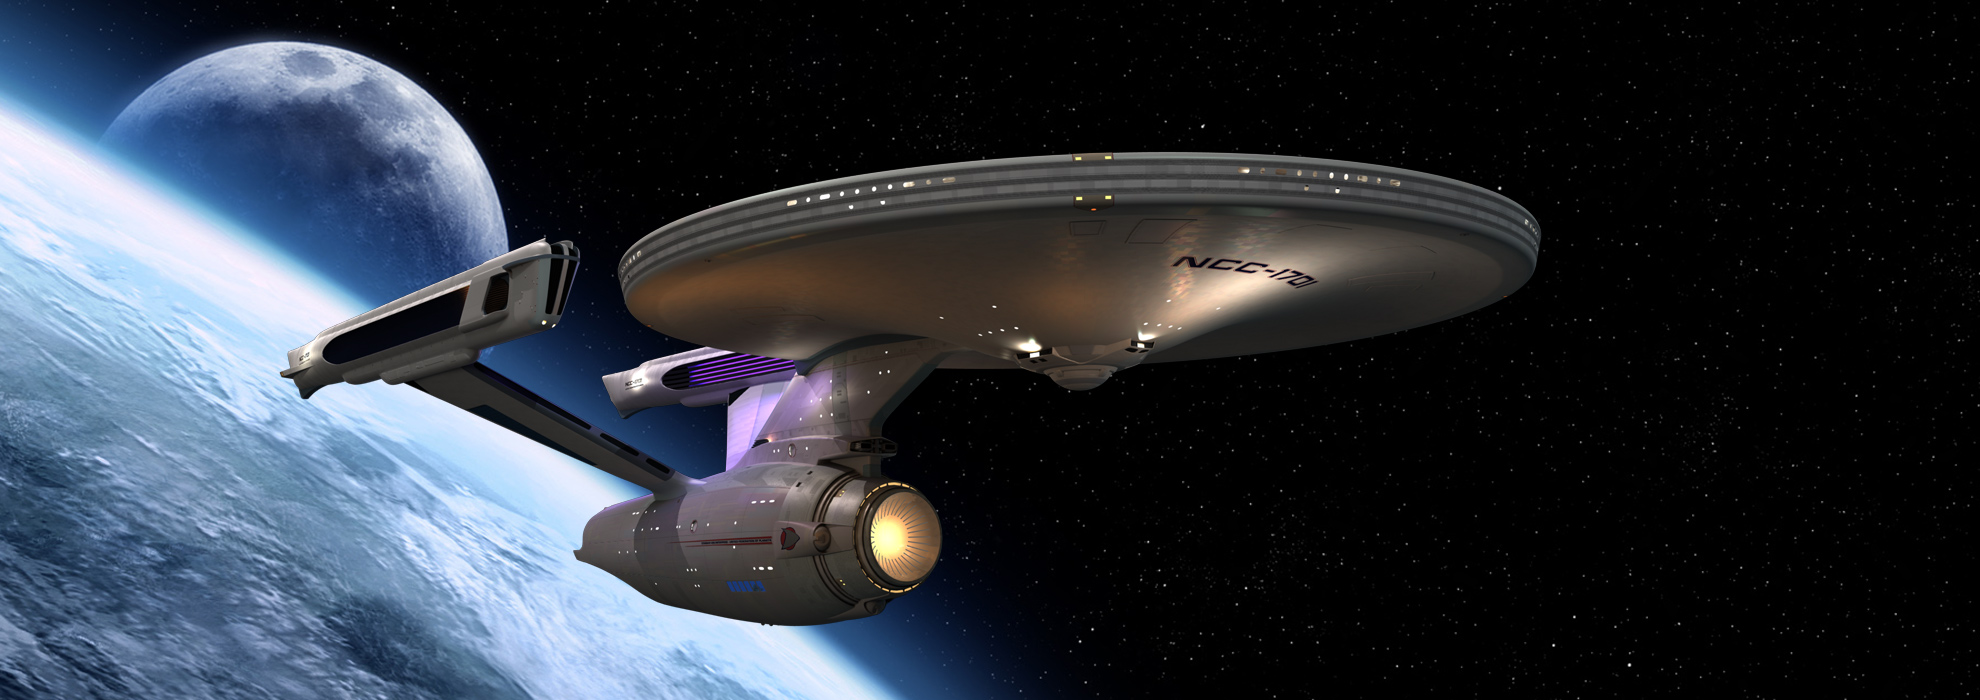 Starship Enterprise